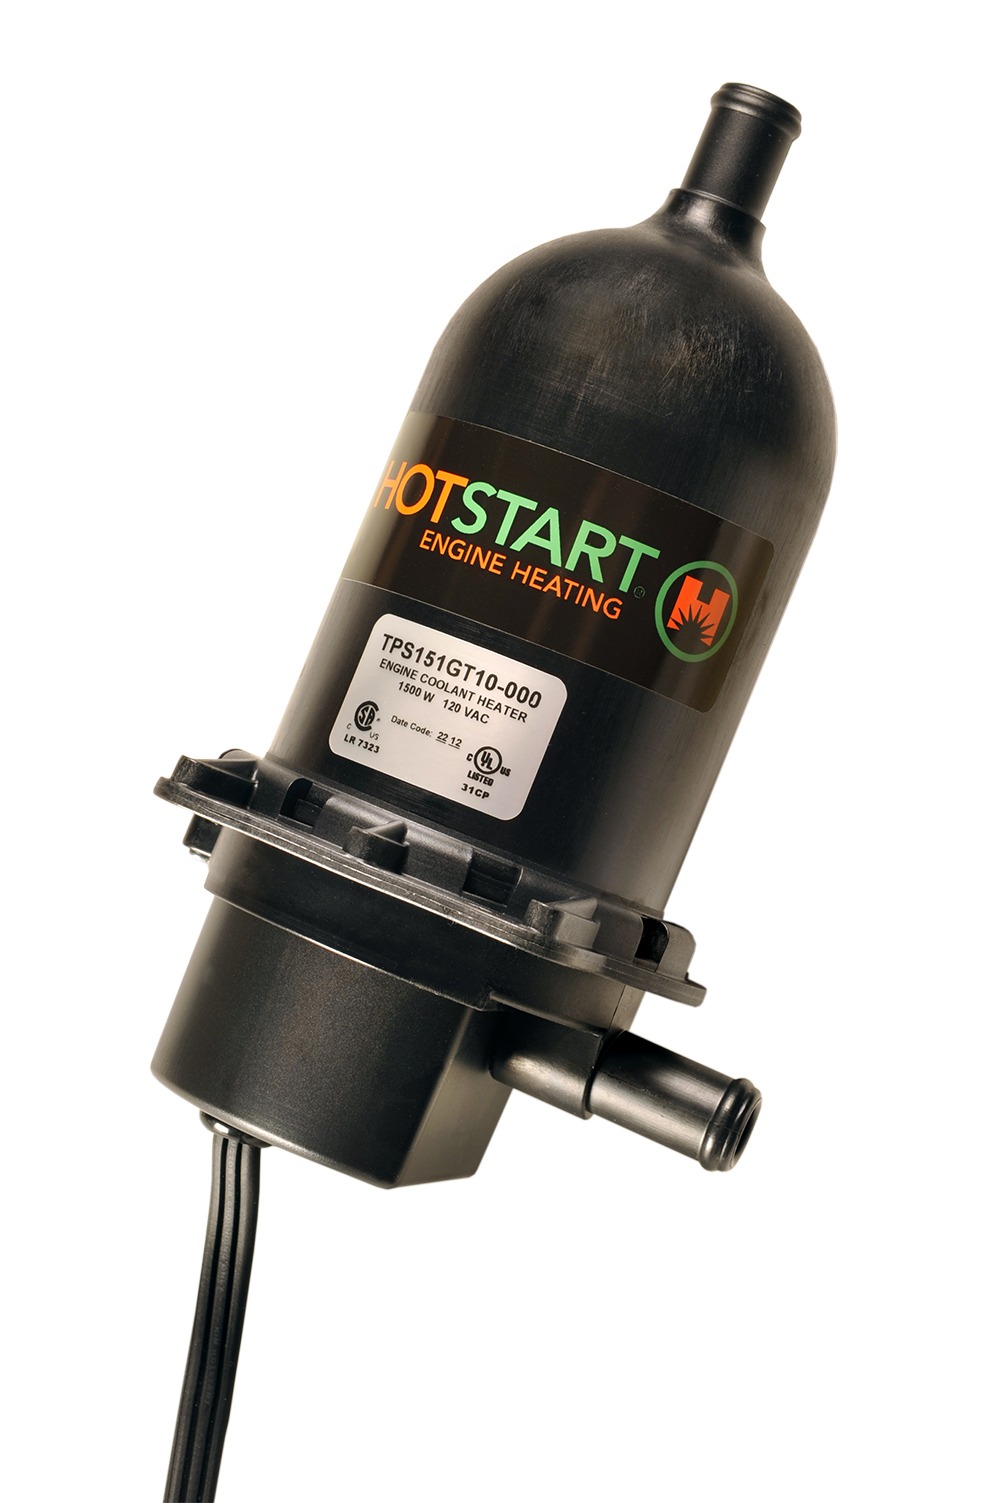 Coolant preheater HOTSTART Engine Heater TPS051GT8-000 1 Year Warranty! Original 